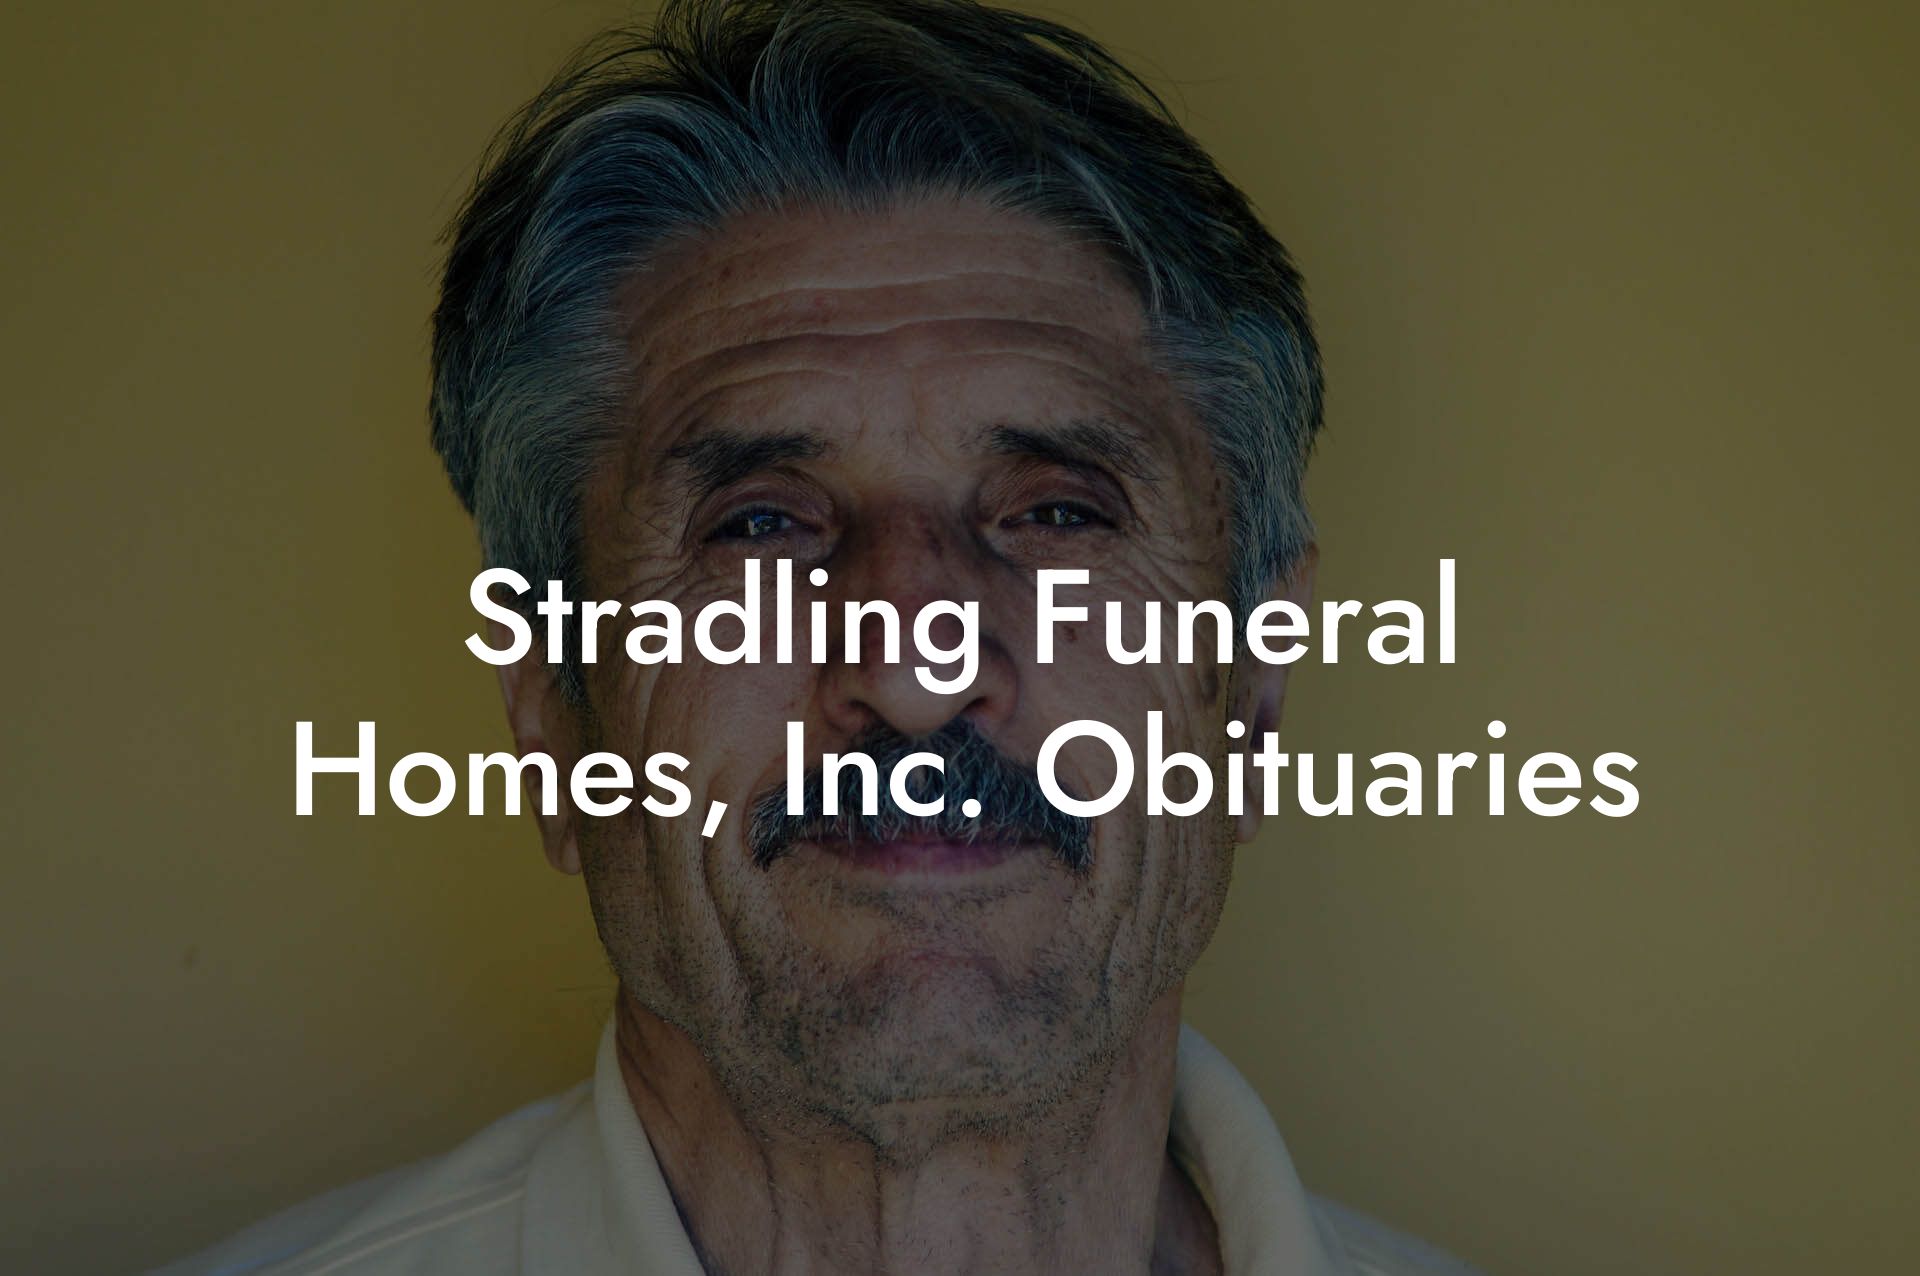 Stradling Funeral Homes, Inc. Obituaries